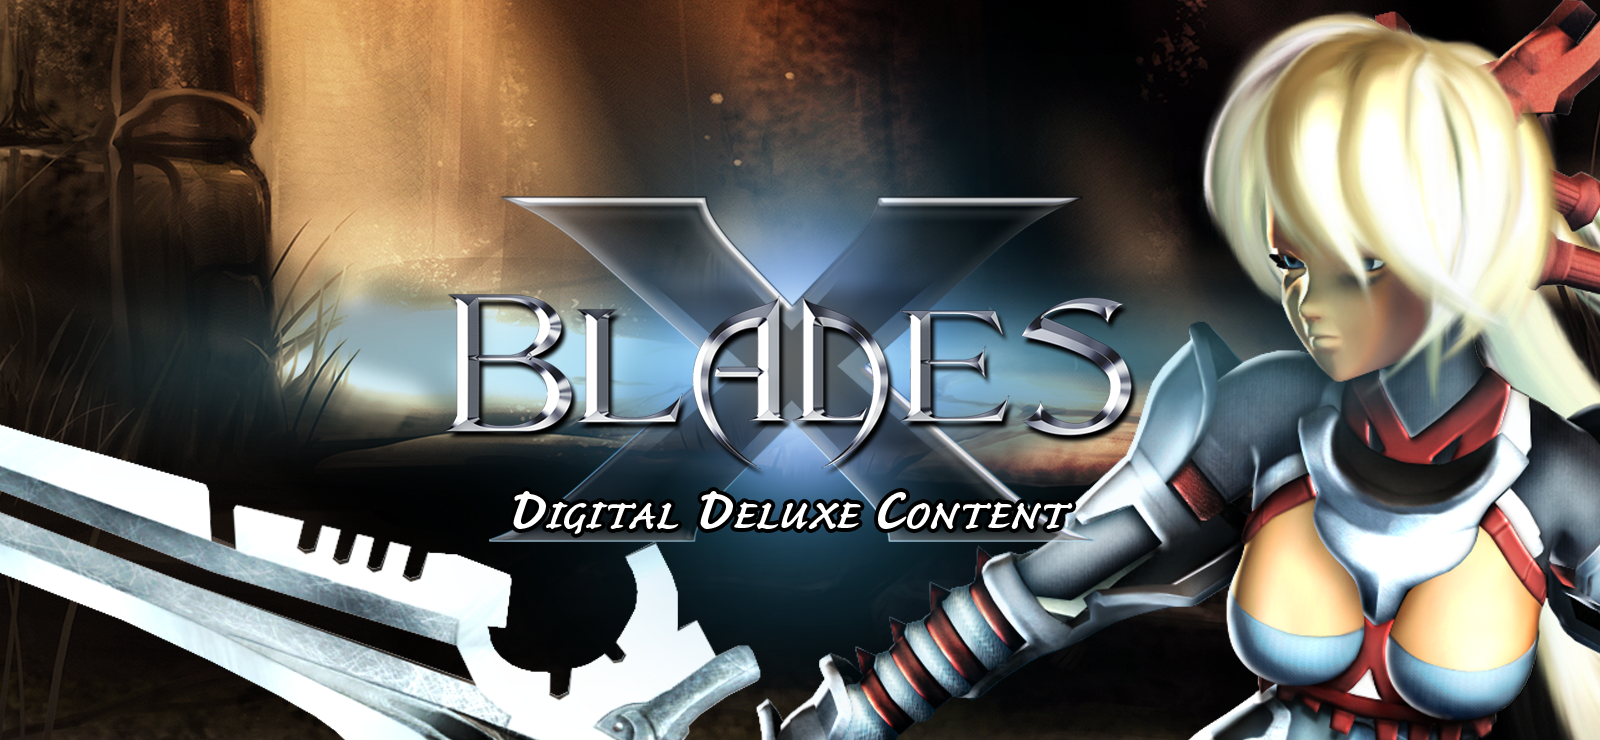 X-Blades Digital Deluxe DLC